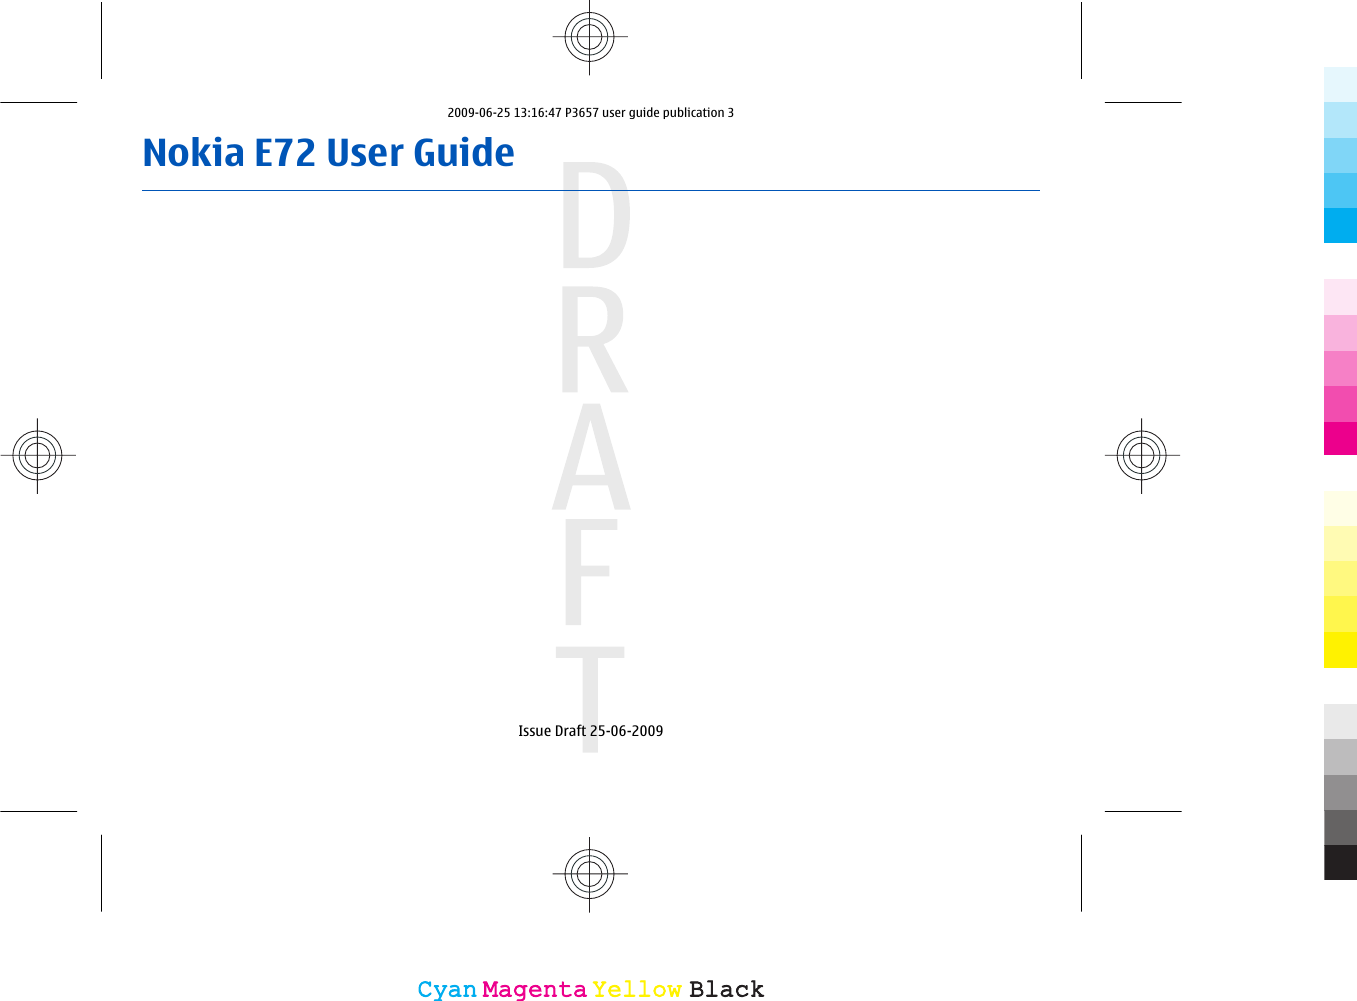 Nokia E72 User GuideIssue Draft 25-06-2009CyanCyanMagentaMagentaYellowYellowBlackBlack2009-06-25 13:16:47 P3657 user guide publication 3